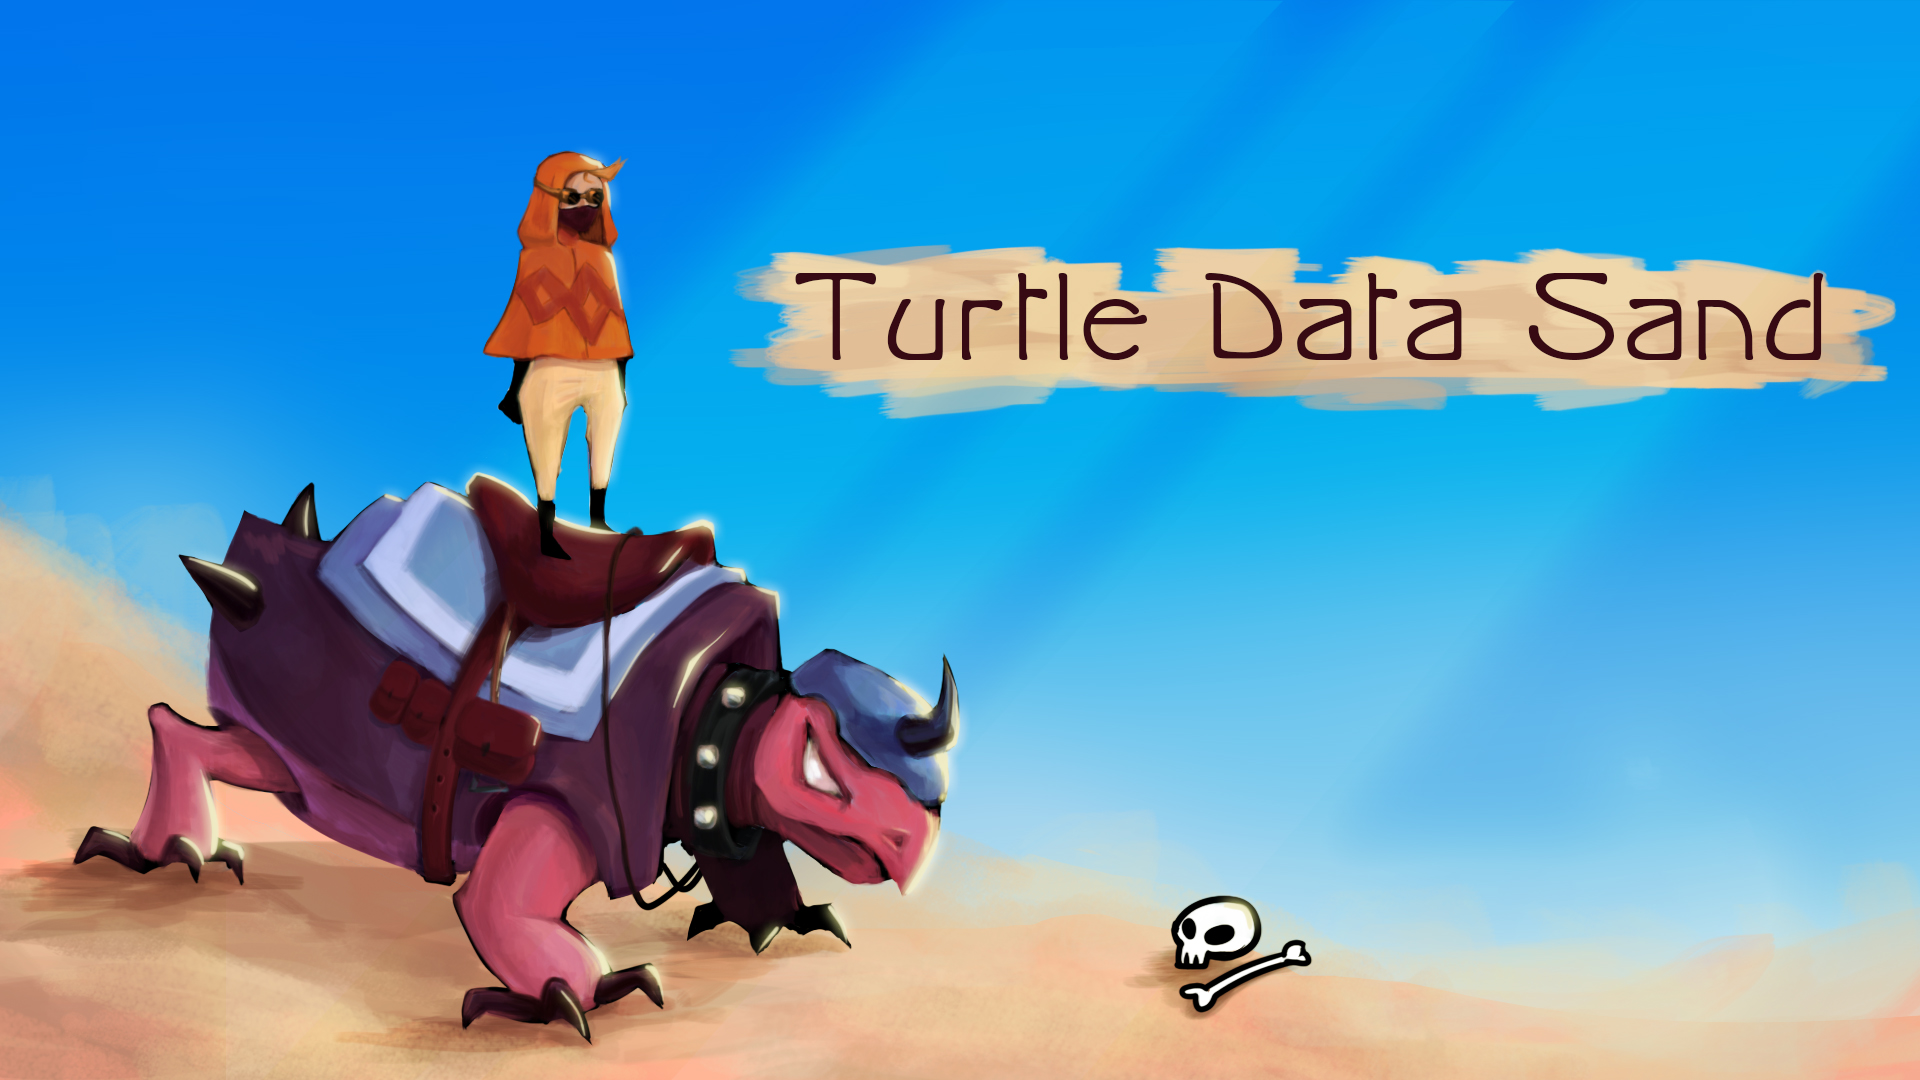 Turtle Data Sand